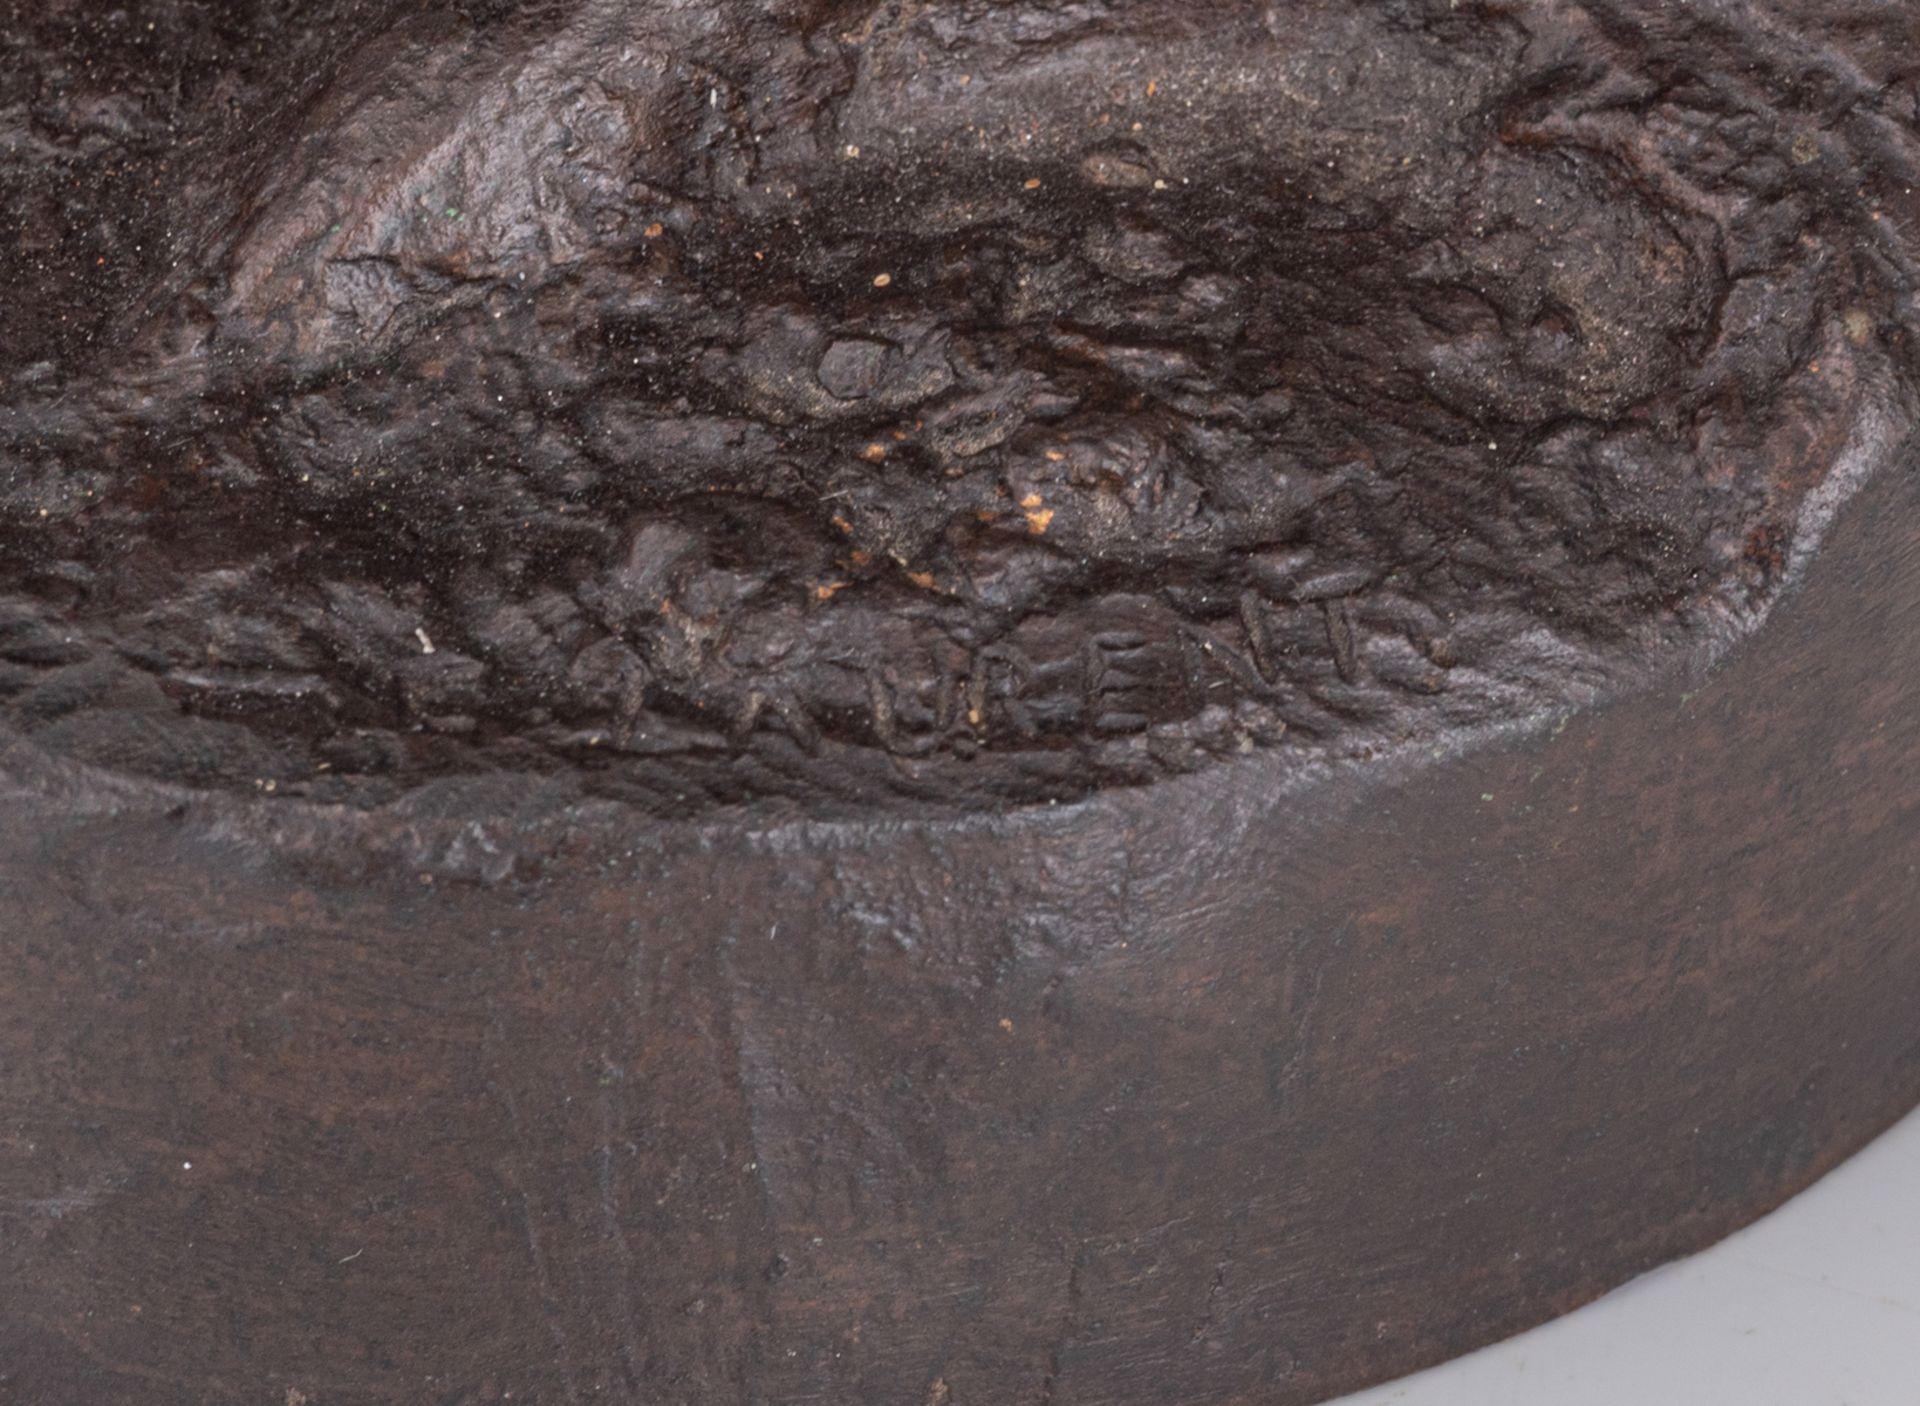 Szczeblewski V., 'Mousse Siffleur', patinated bronze, H 54 cm; added: Laurent, a young beauty sewing - Bild 7 aus 7